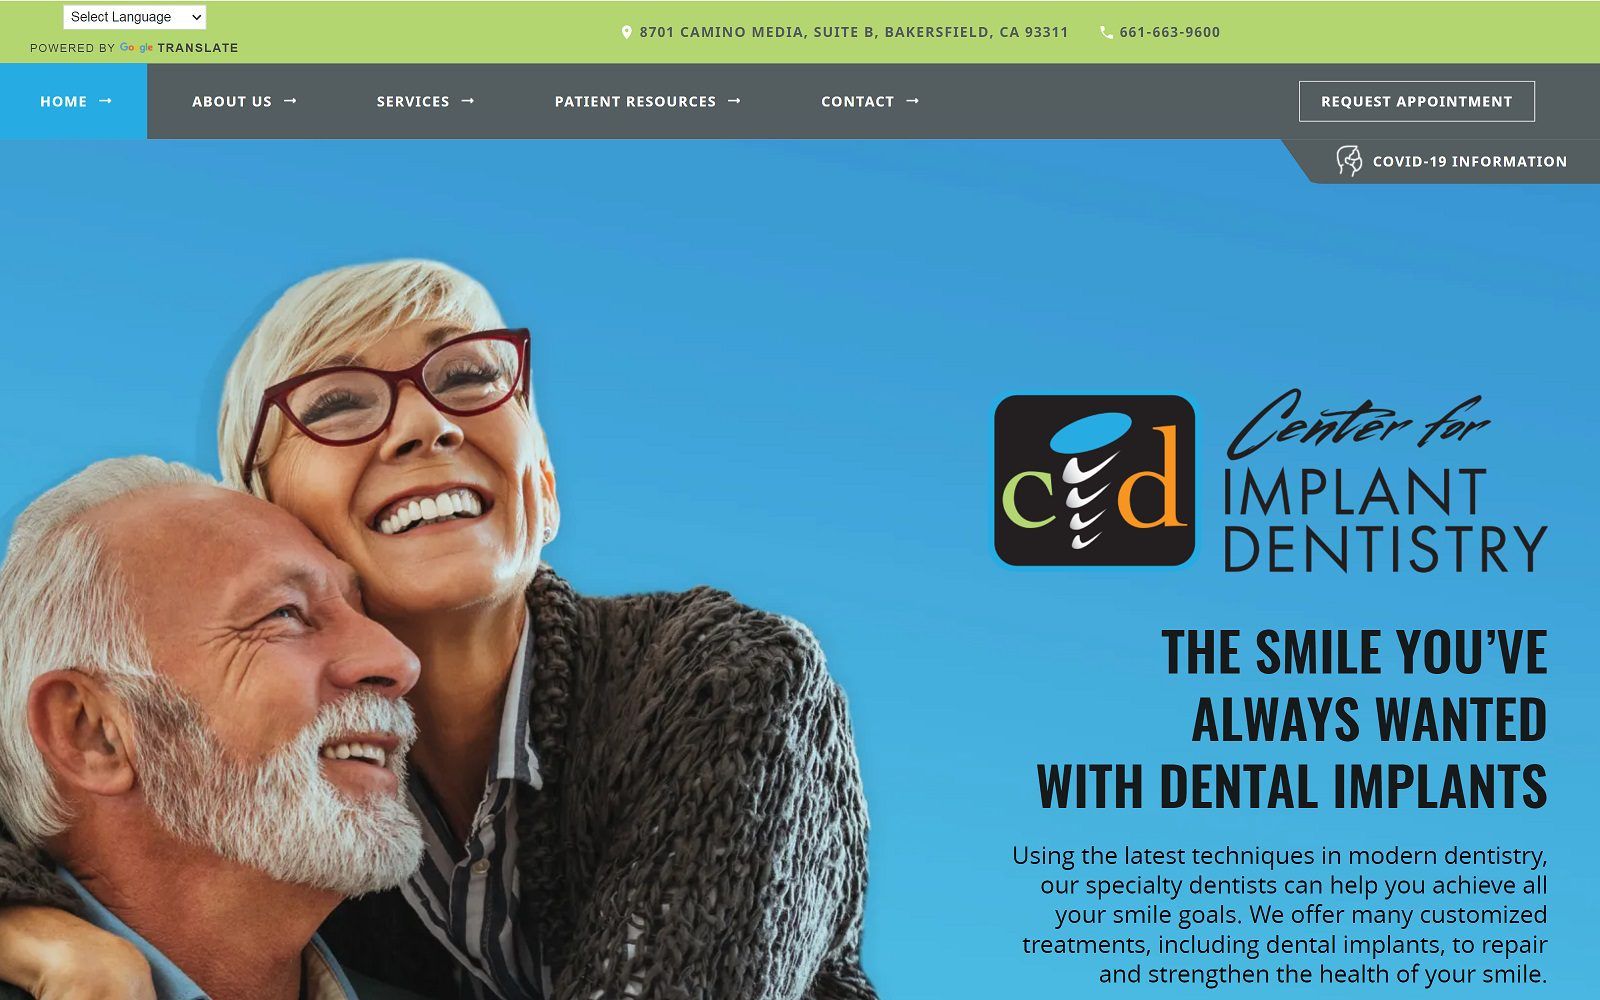 The screenshot of center for implant dentistry website